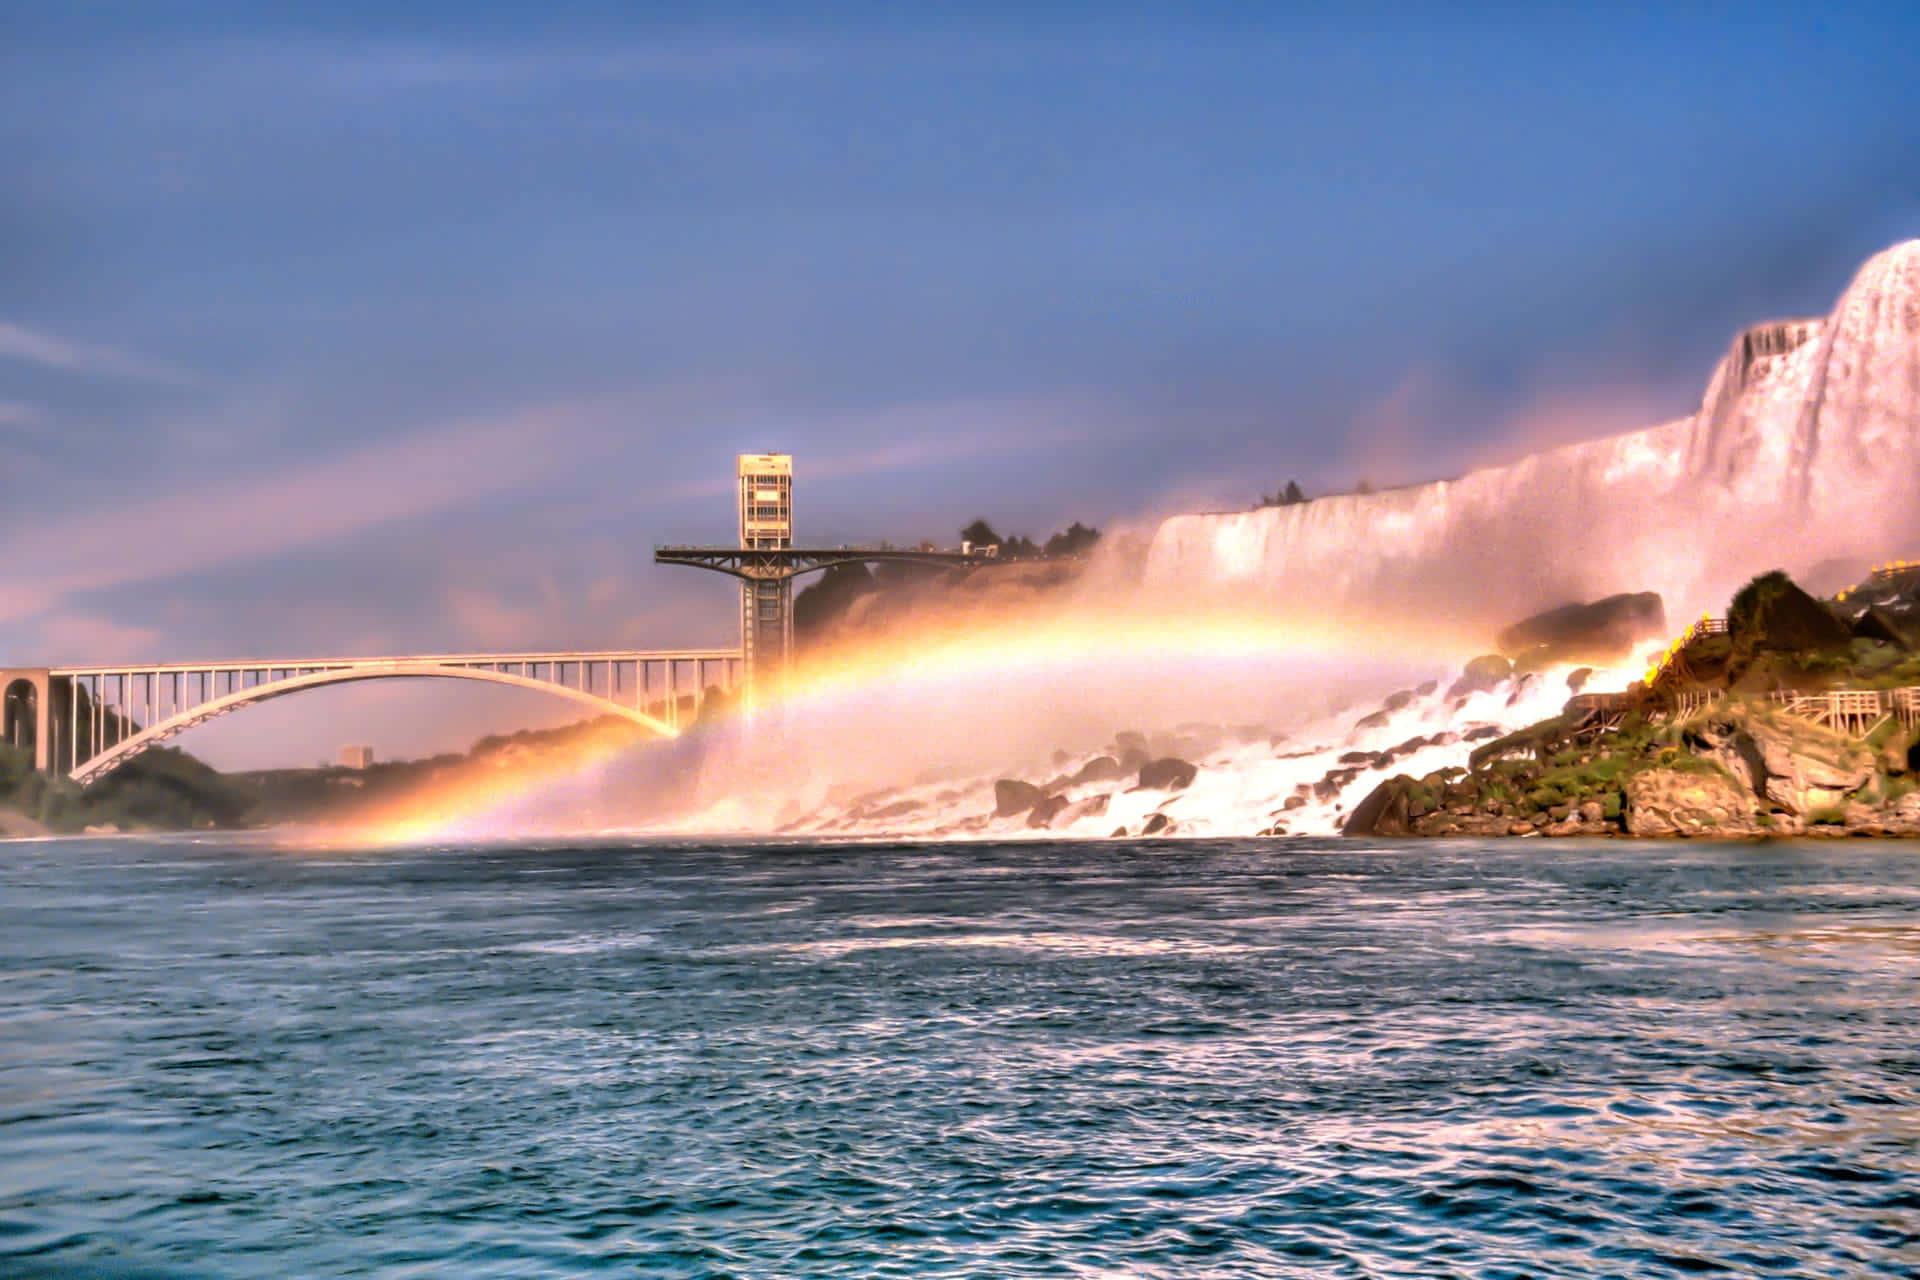 Majesty of Niagara Falls - A breathtaking moment at 720p resolution